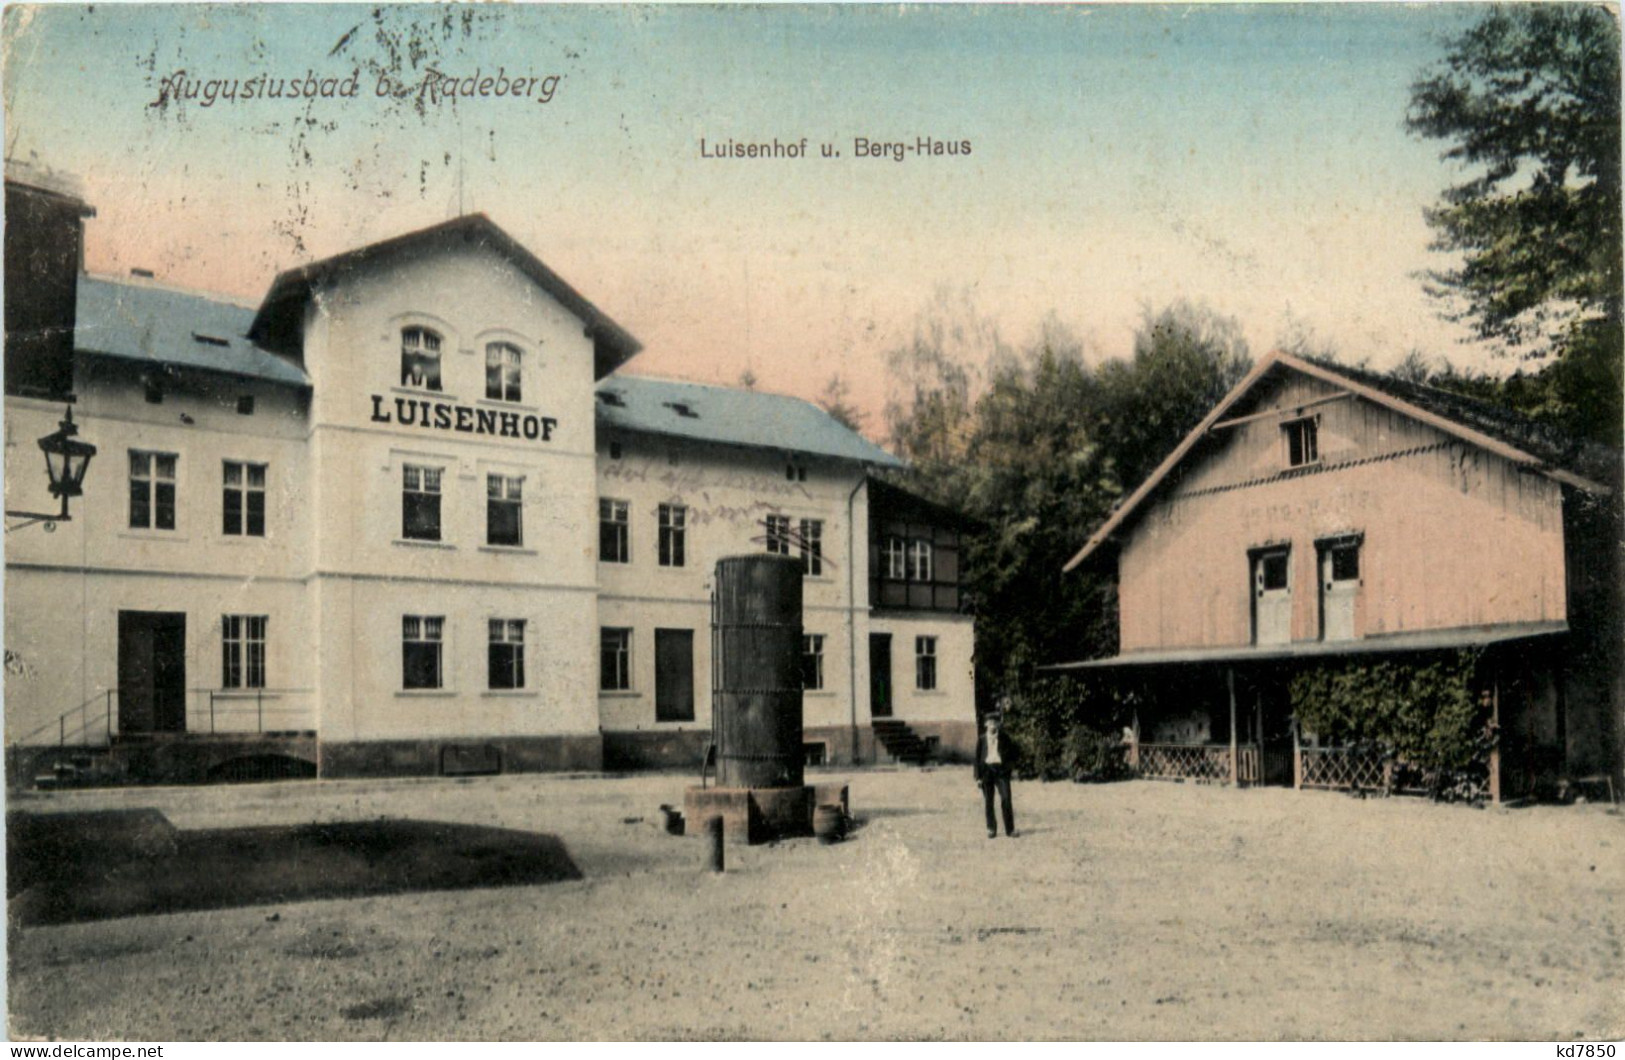 Augustusbad, B.Radeberg, Luisenhof Und Berghaus - Bautzen